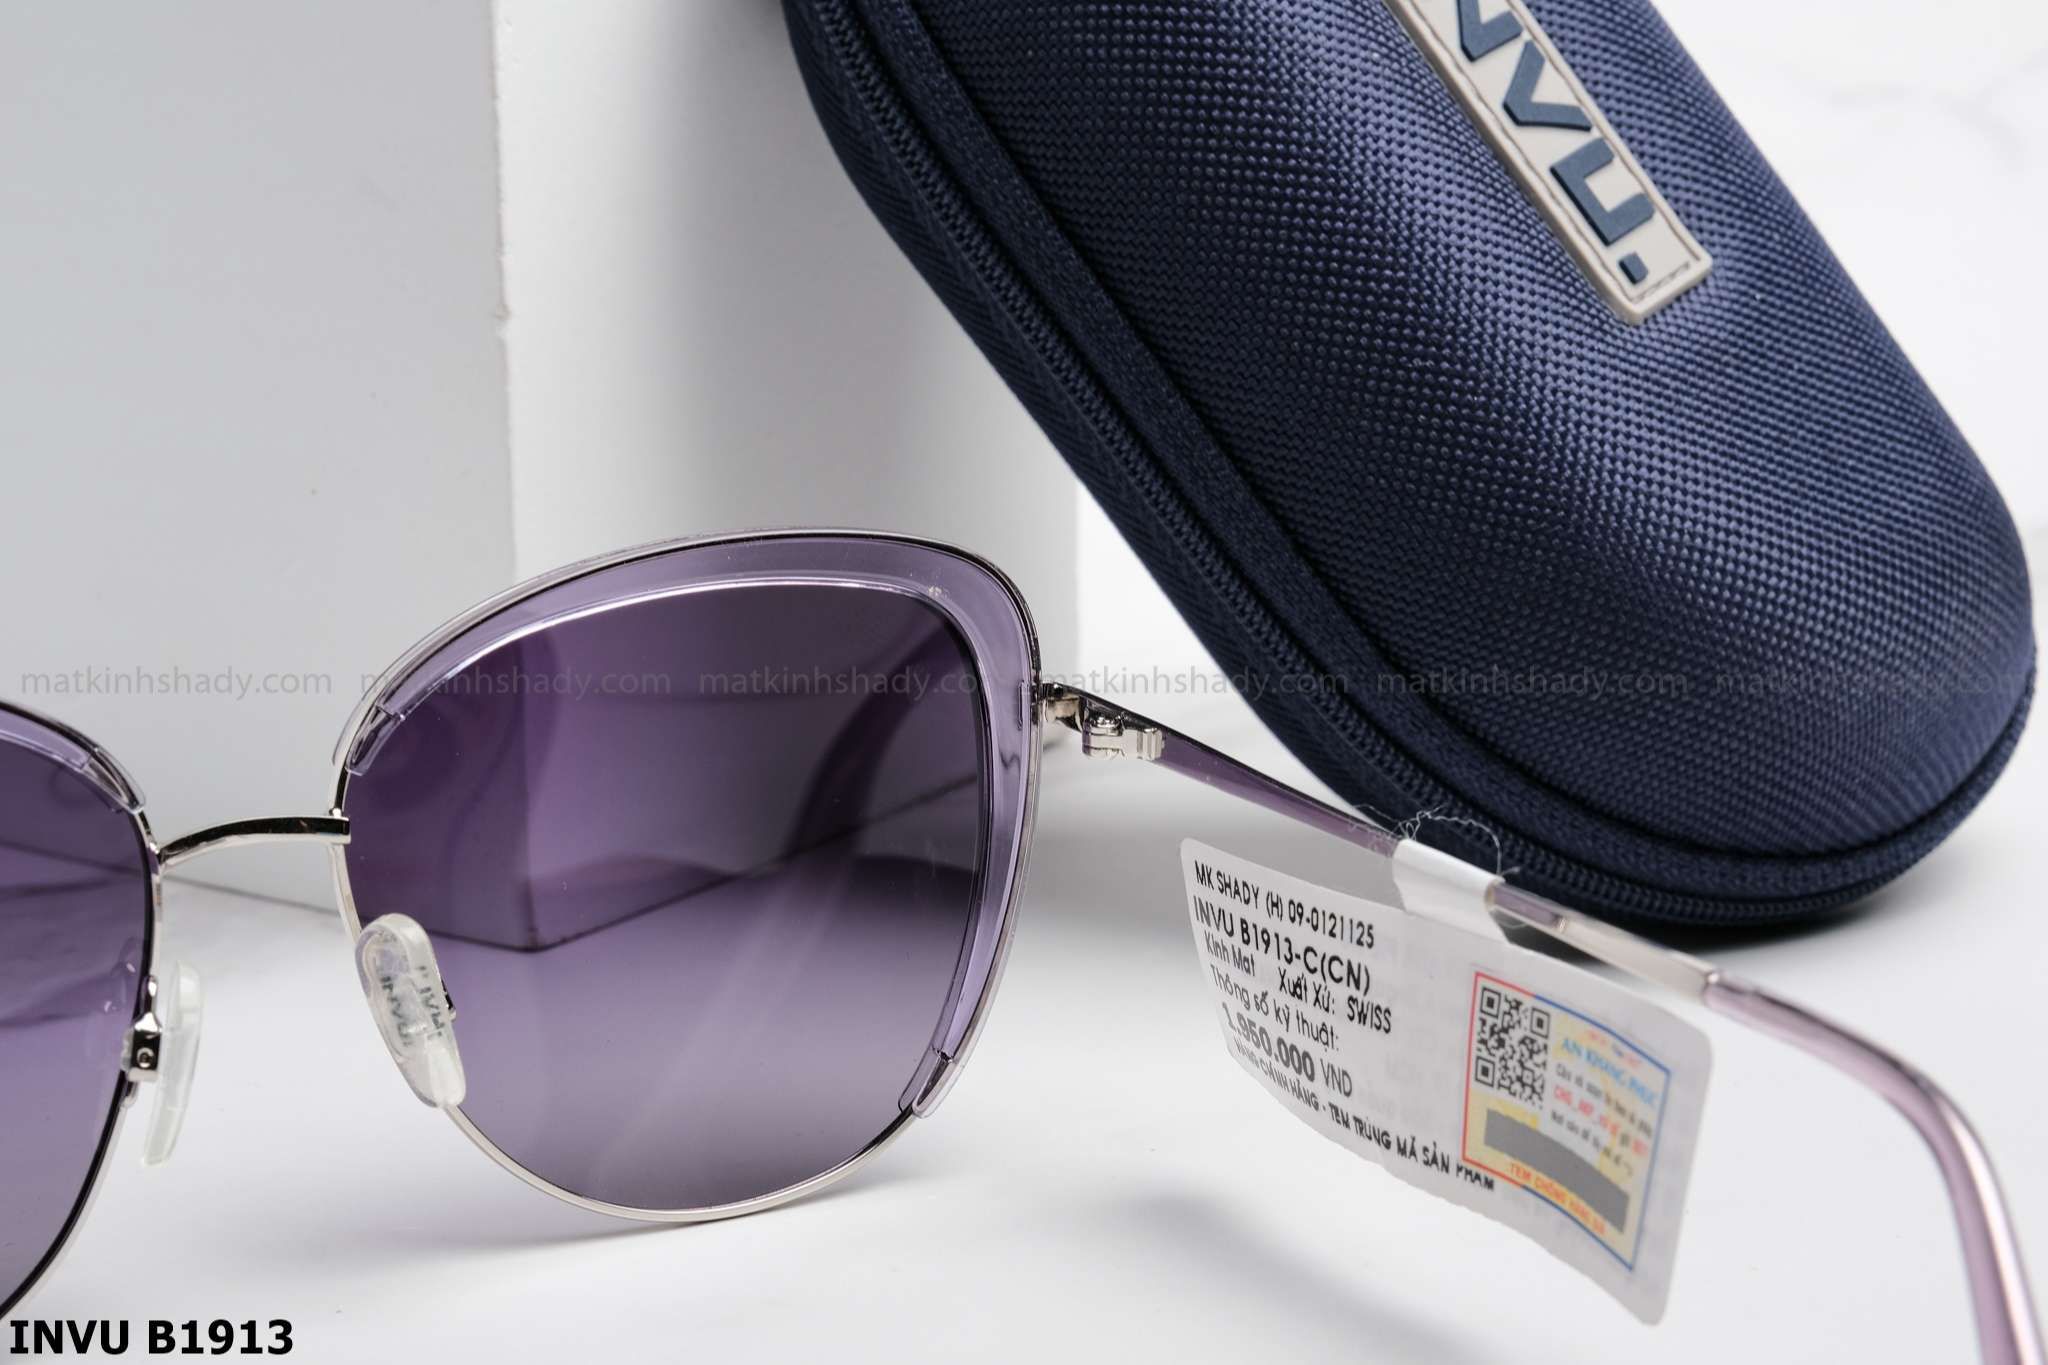  Invu Eyewear - Sunglasses - B1913 